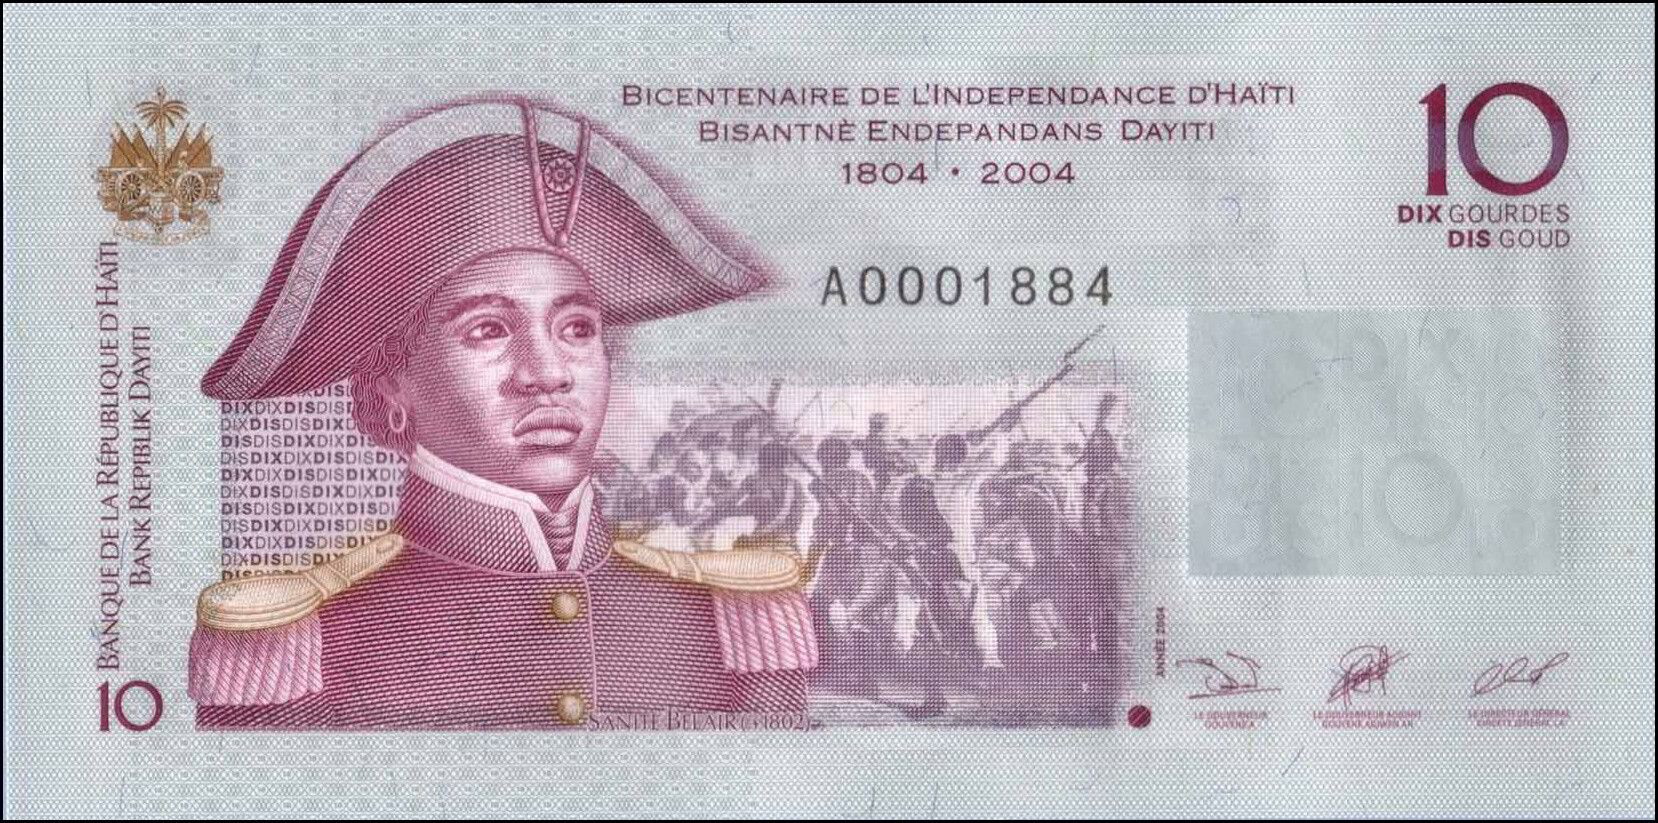 Lieutenant Sanite Belair, Hero of the Haitian Revolution